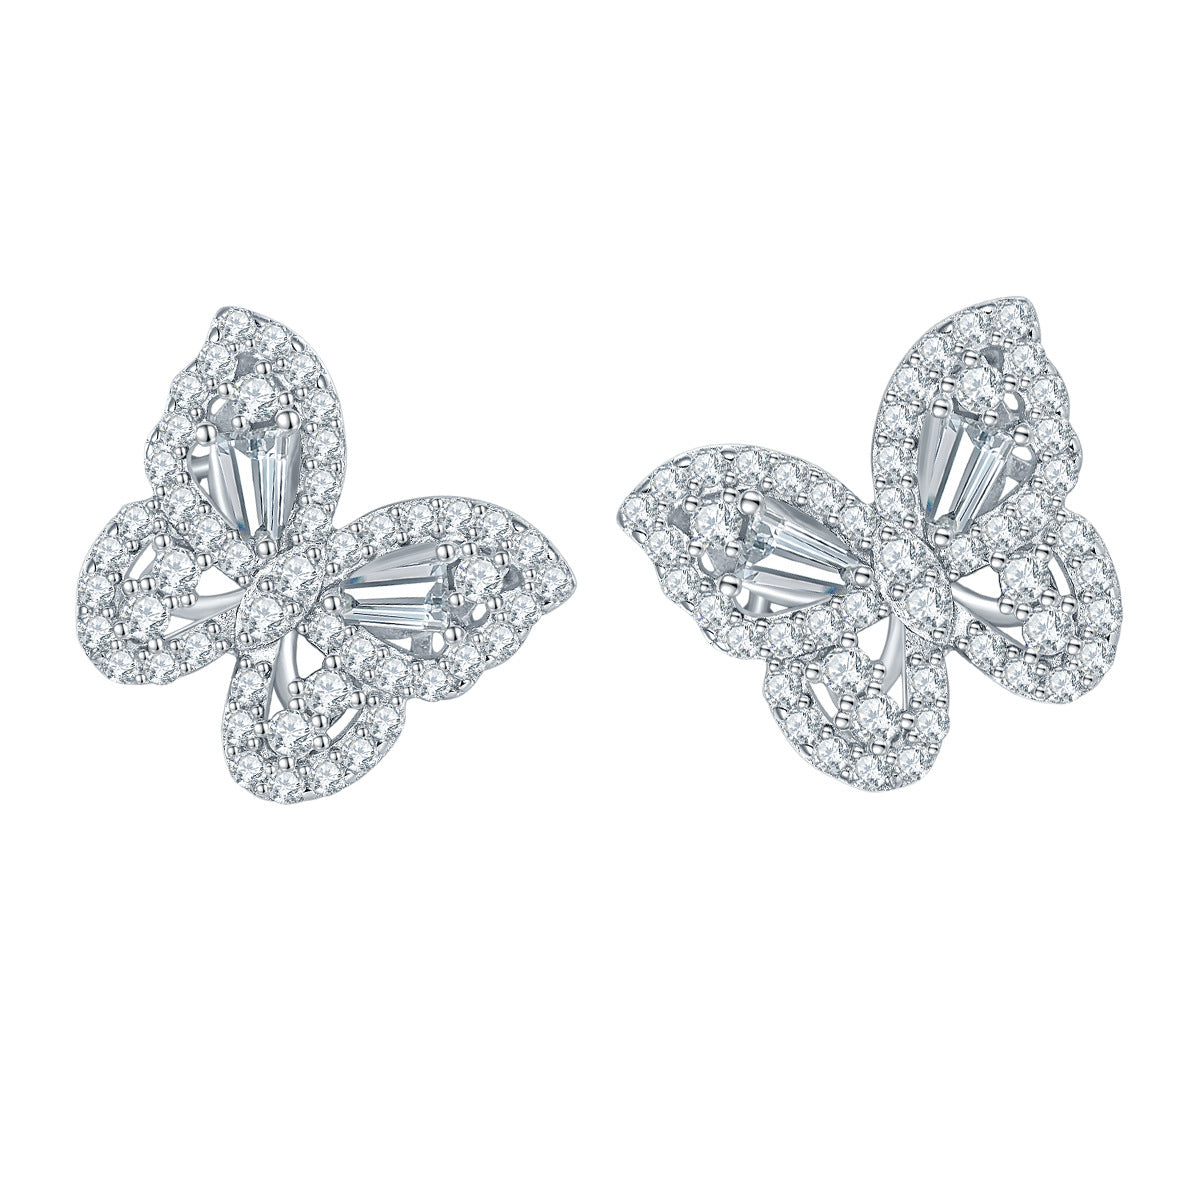 New Bow Full Diamond Moissanite Stud Earrings Premium Women's 925 Sterling Silver Plated with 18k Gold